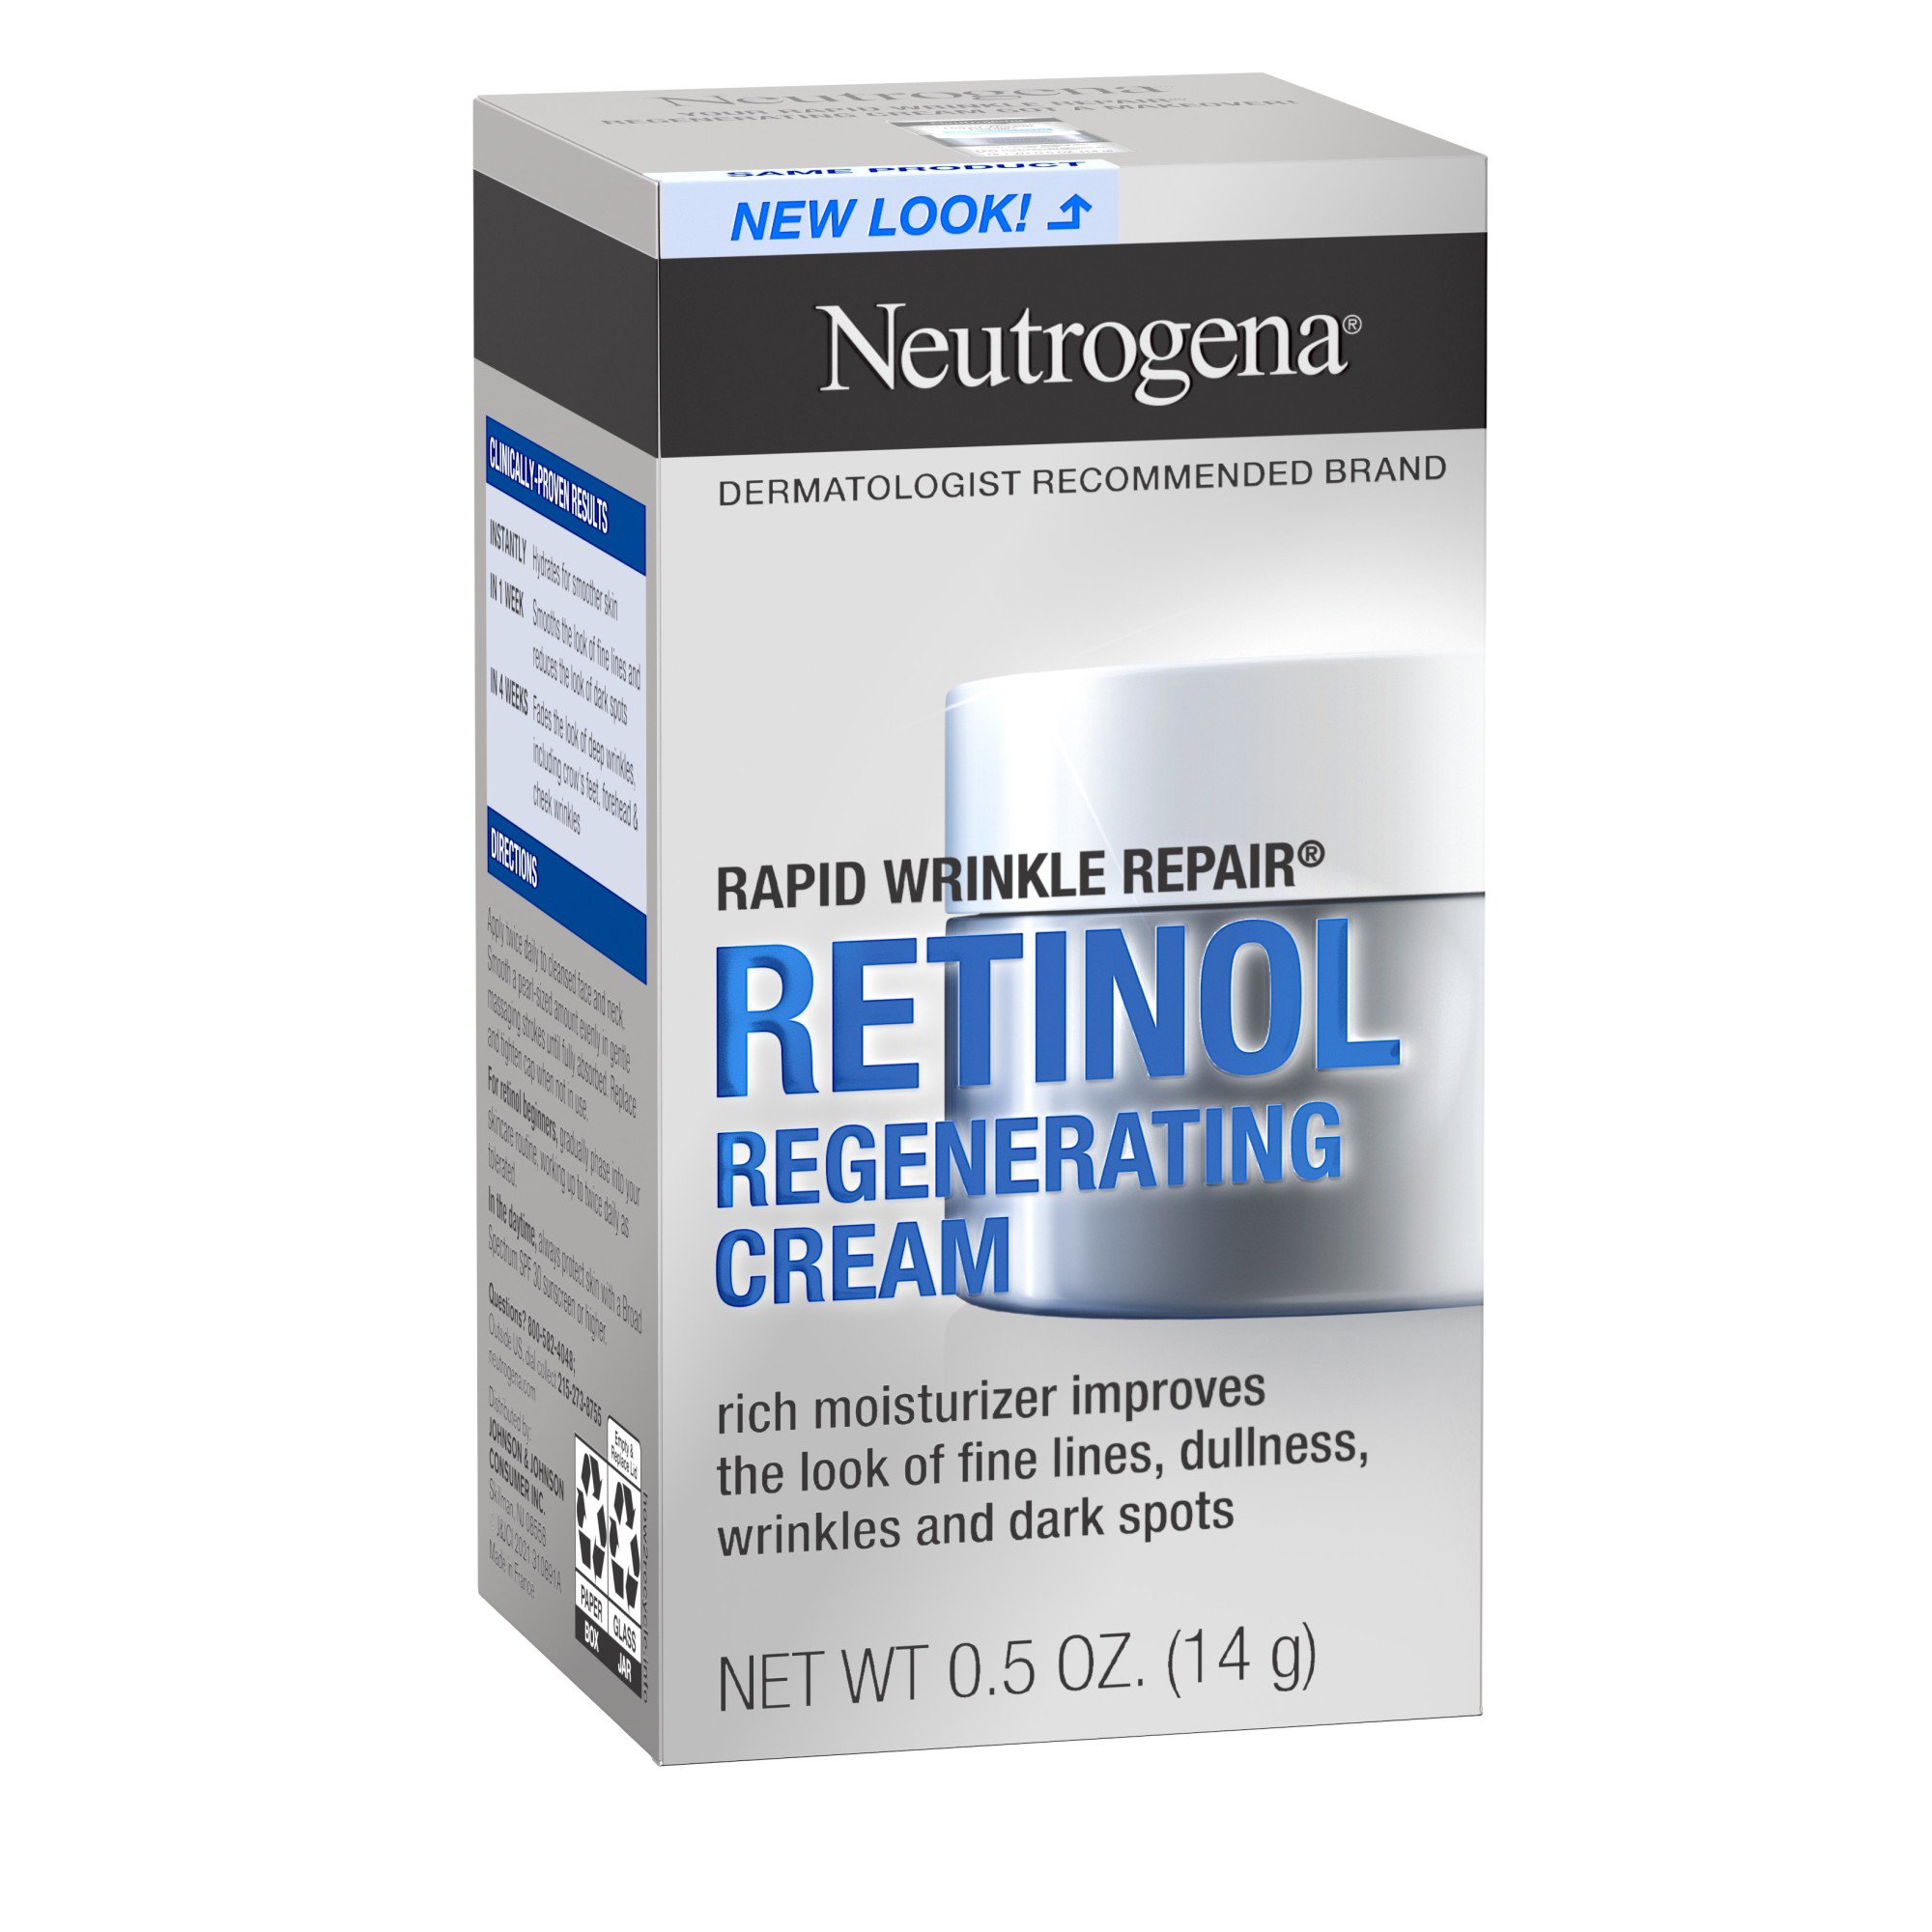 Neutrogena Rapid Wrinkle Repair Retinol Regenerating Cream Makeup Tips